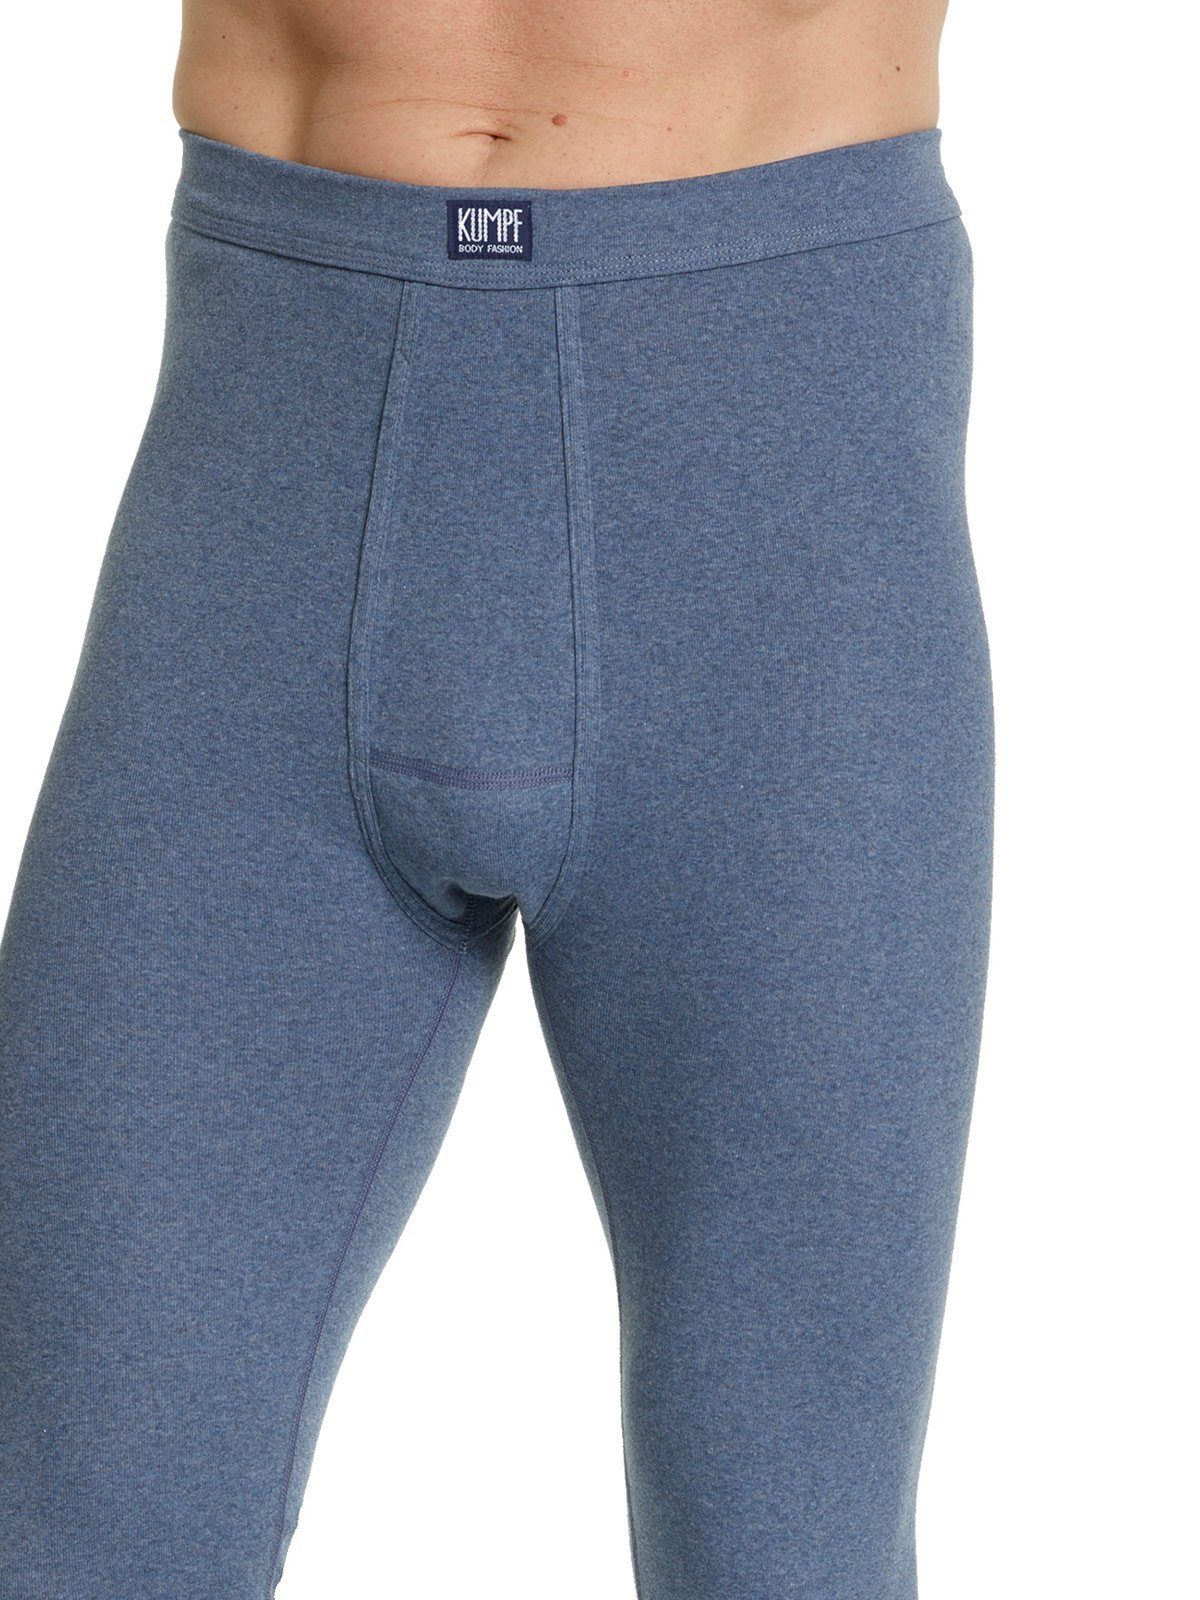 KUMPF Lange Unterhose blau-melange Herren Eingriff mit mit eingriff Unterhose 1-St) (Stück, lange Workerwear